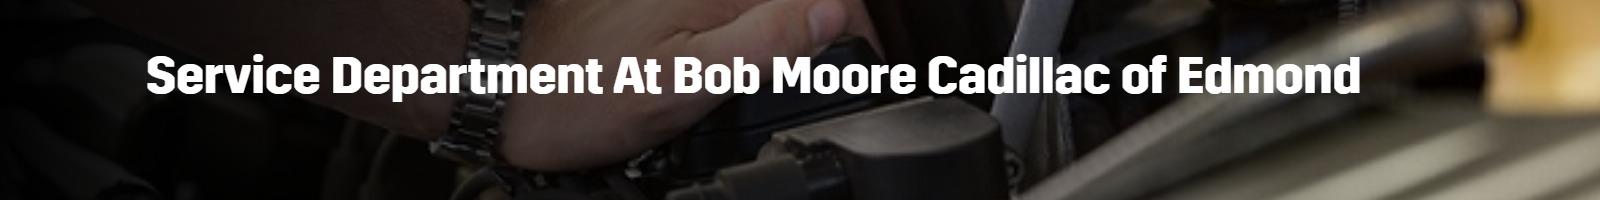 Service Department Bob Moore Cadillac of Edmond